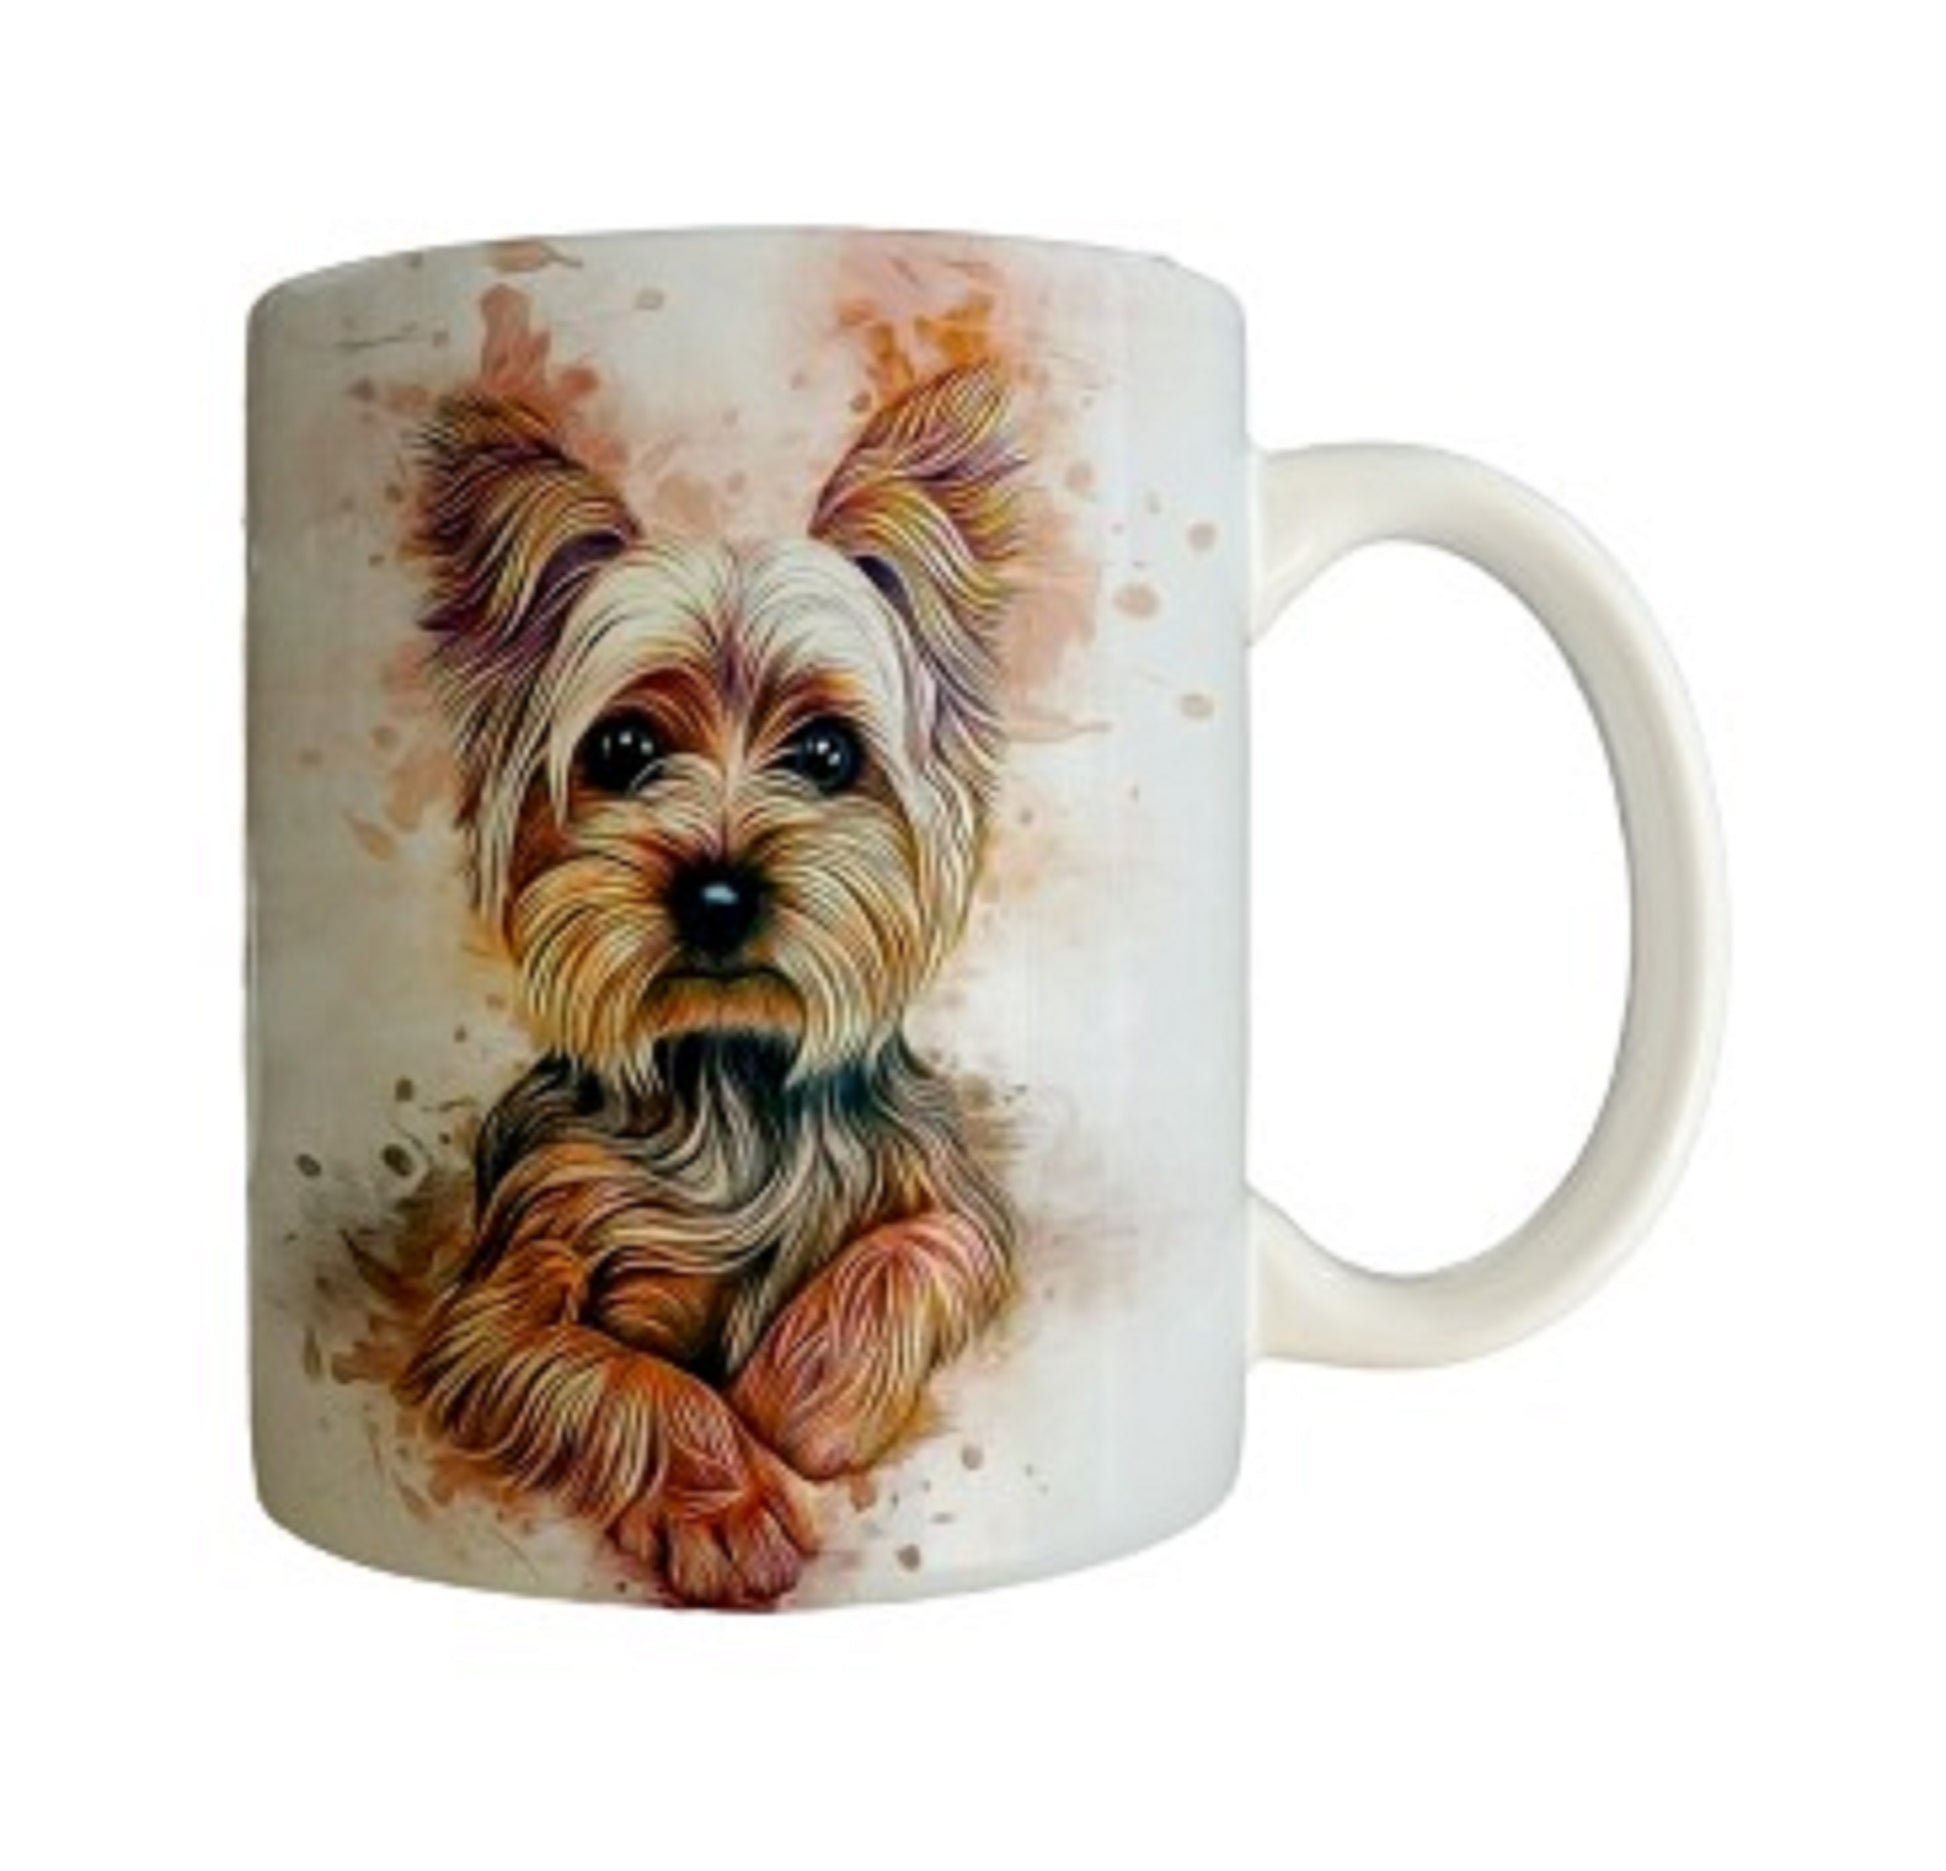  Splashed Yorkshire Terrier Dog Mug by Free Spirit Accessories sold by Free Spirit Accessories